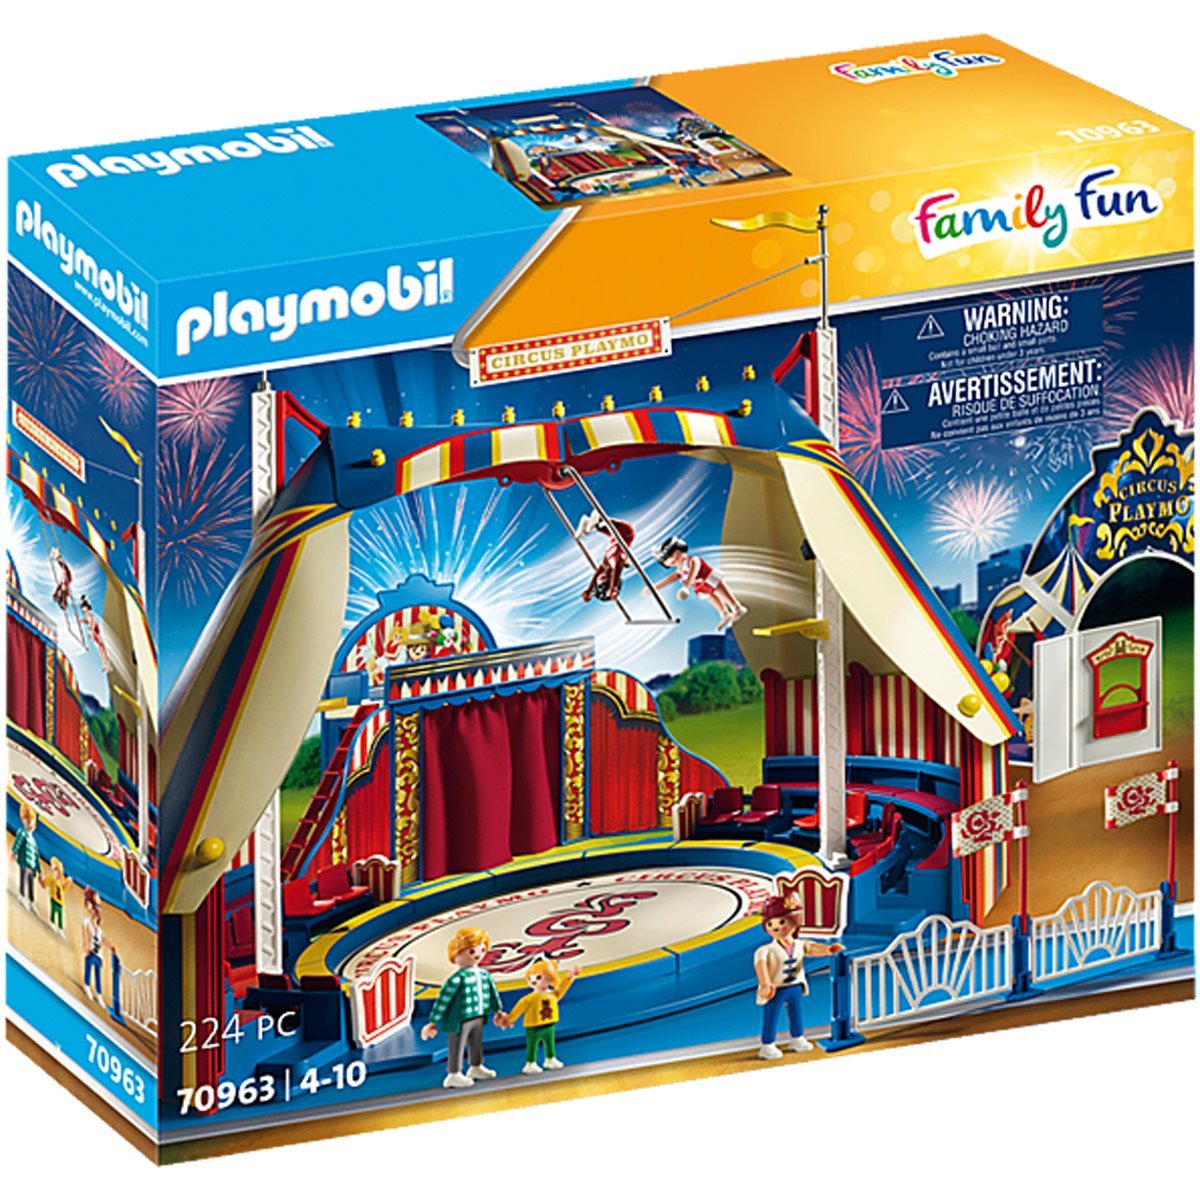 Playmobil 70963 Circus Tent - Entertainment Earth